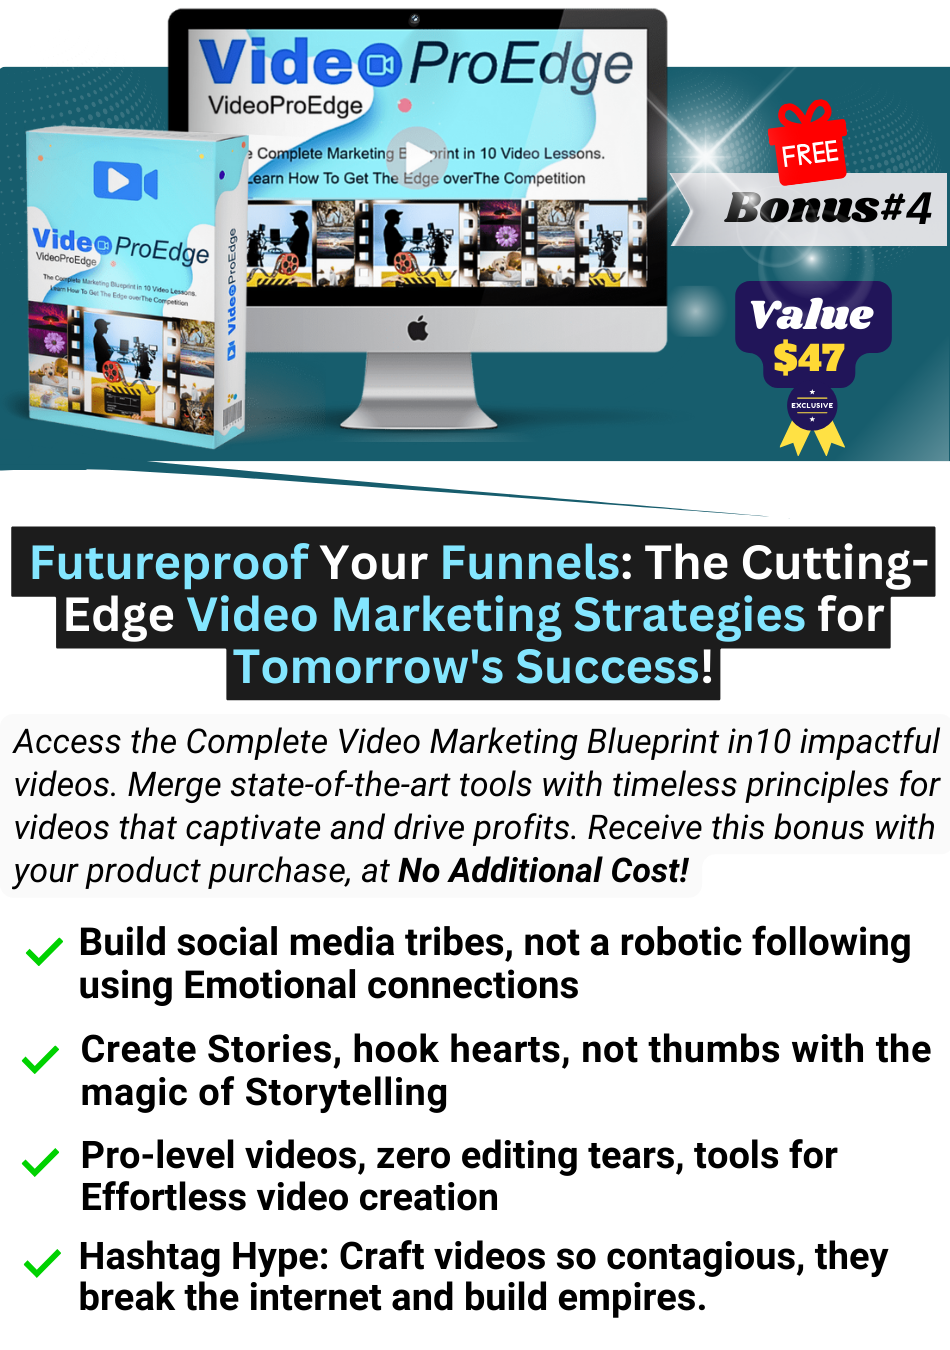 VIDEO PRO EDGE-4B bundle bonus-description of video pro edge bonus